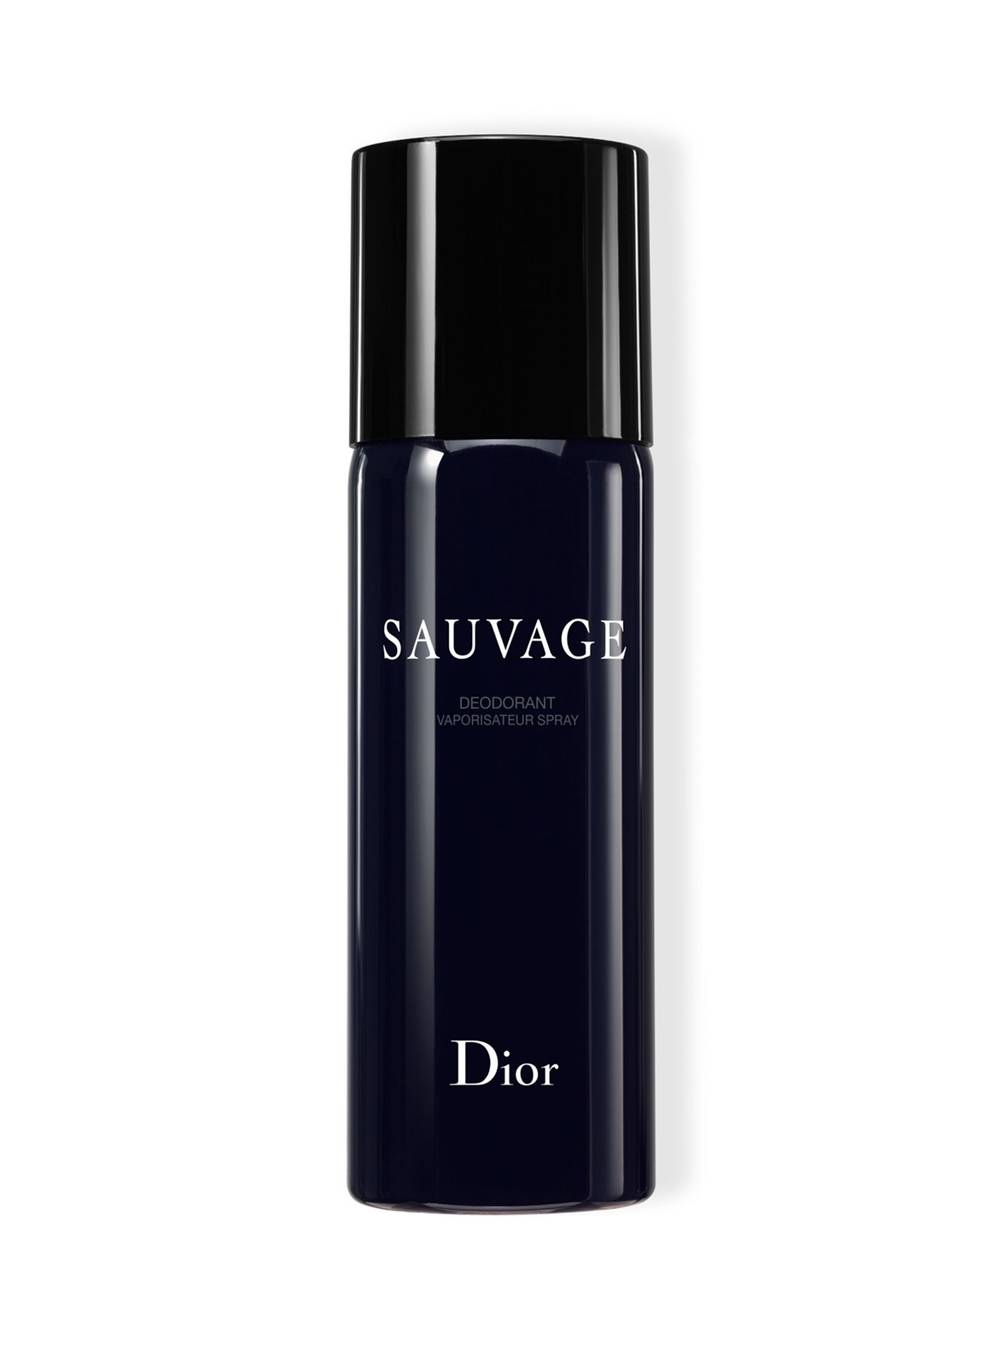 Dior desodorante dior spray sauvage 150 ml